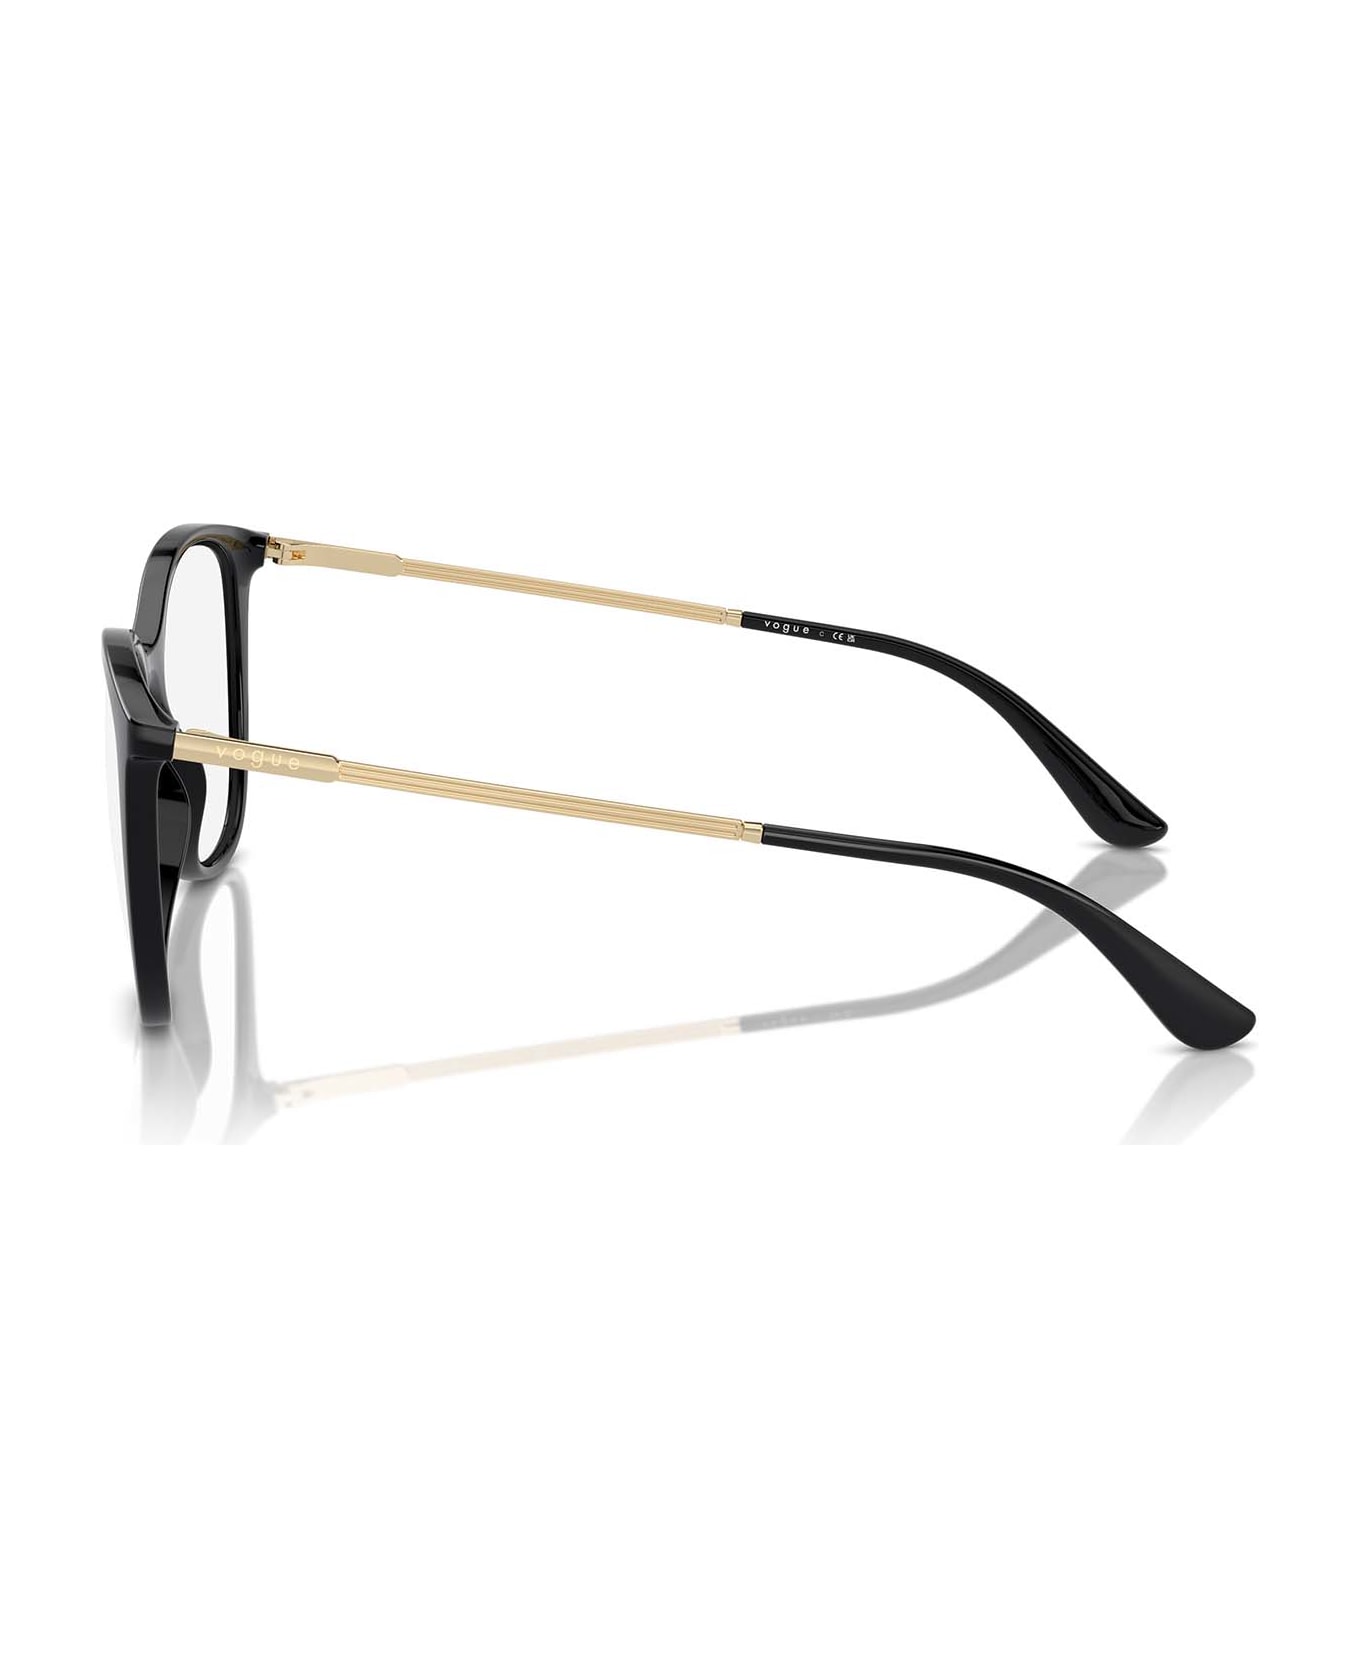 Vogue Eyewear Vo5562 Black Glasses - Black アイウェア